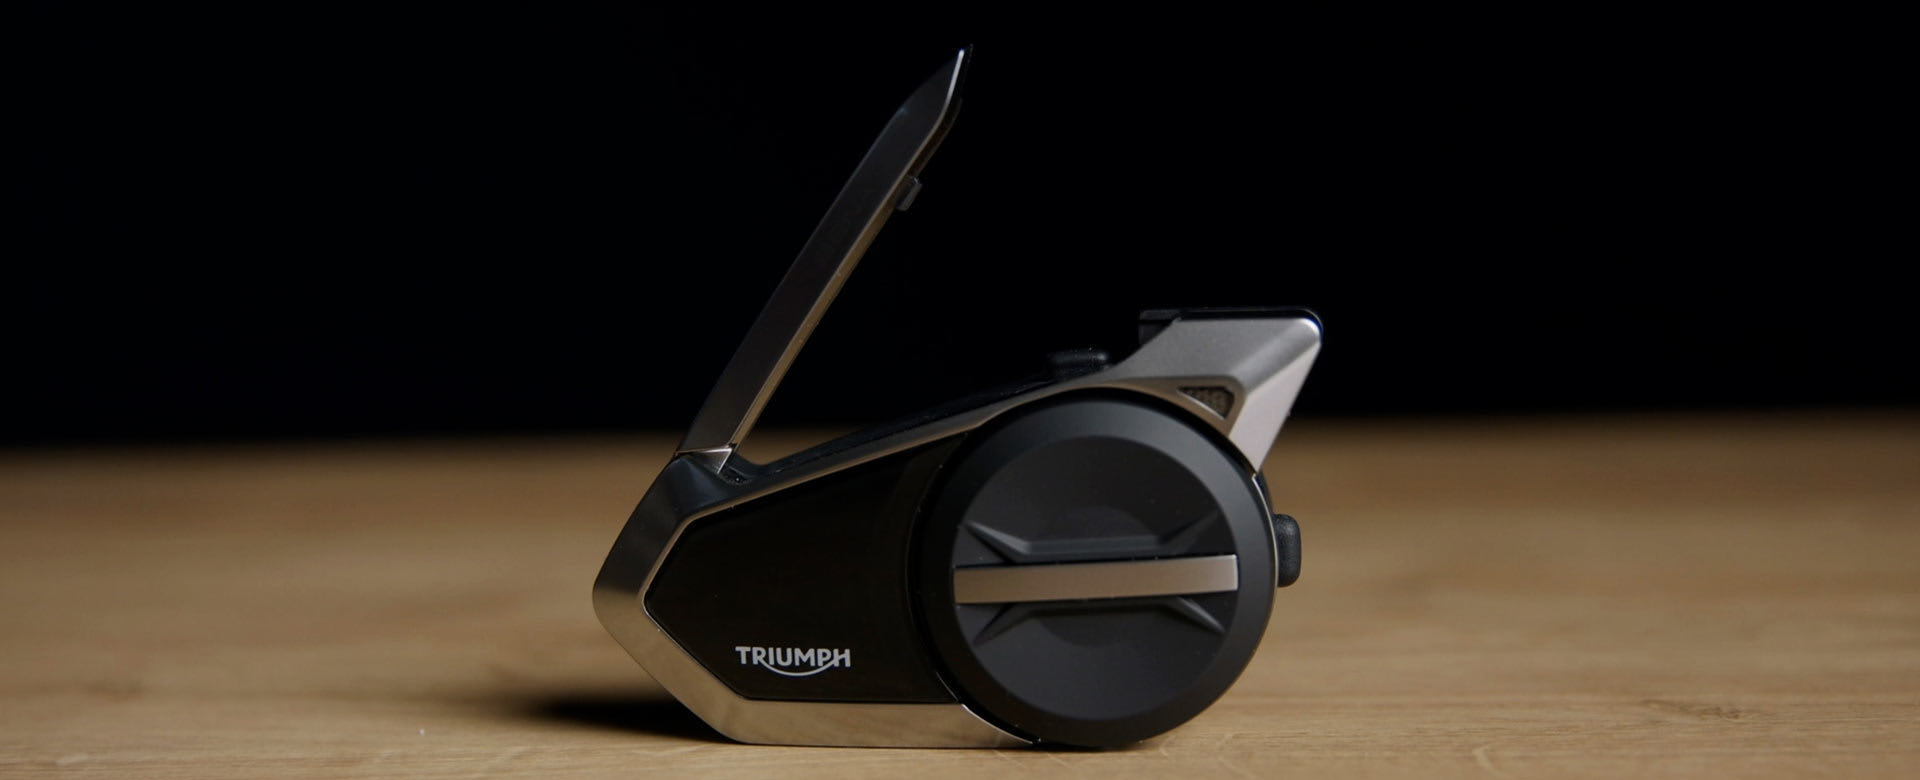 Triumph Sena bluetooth headset